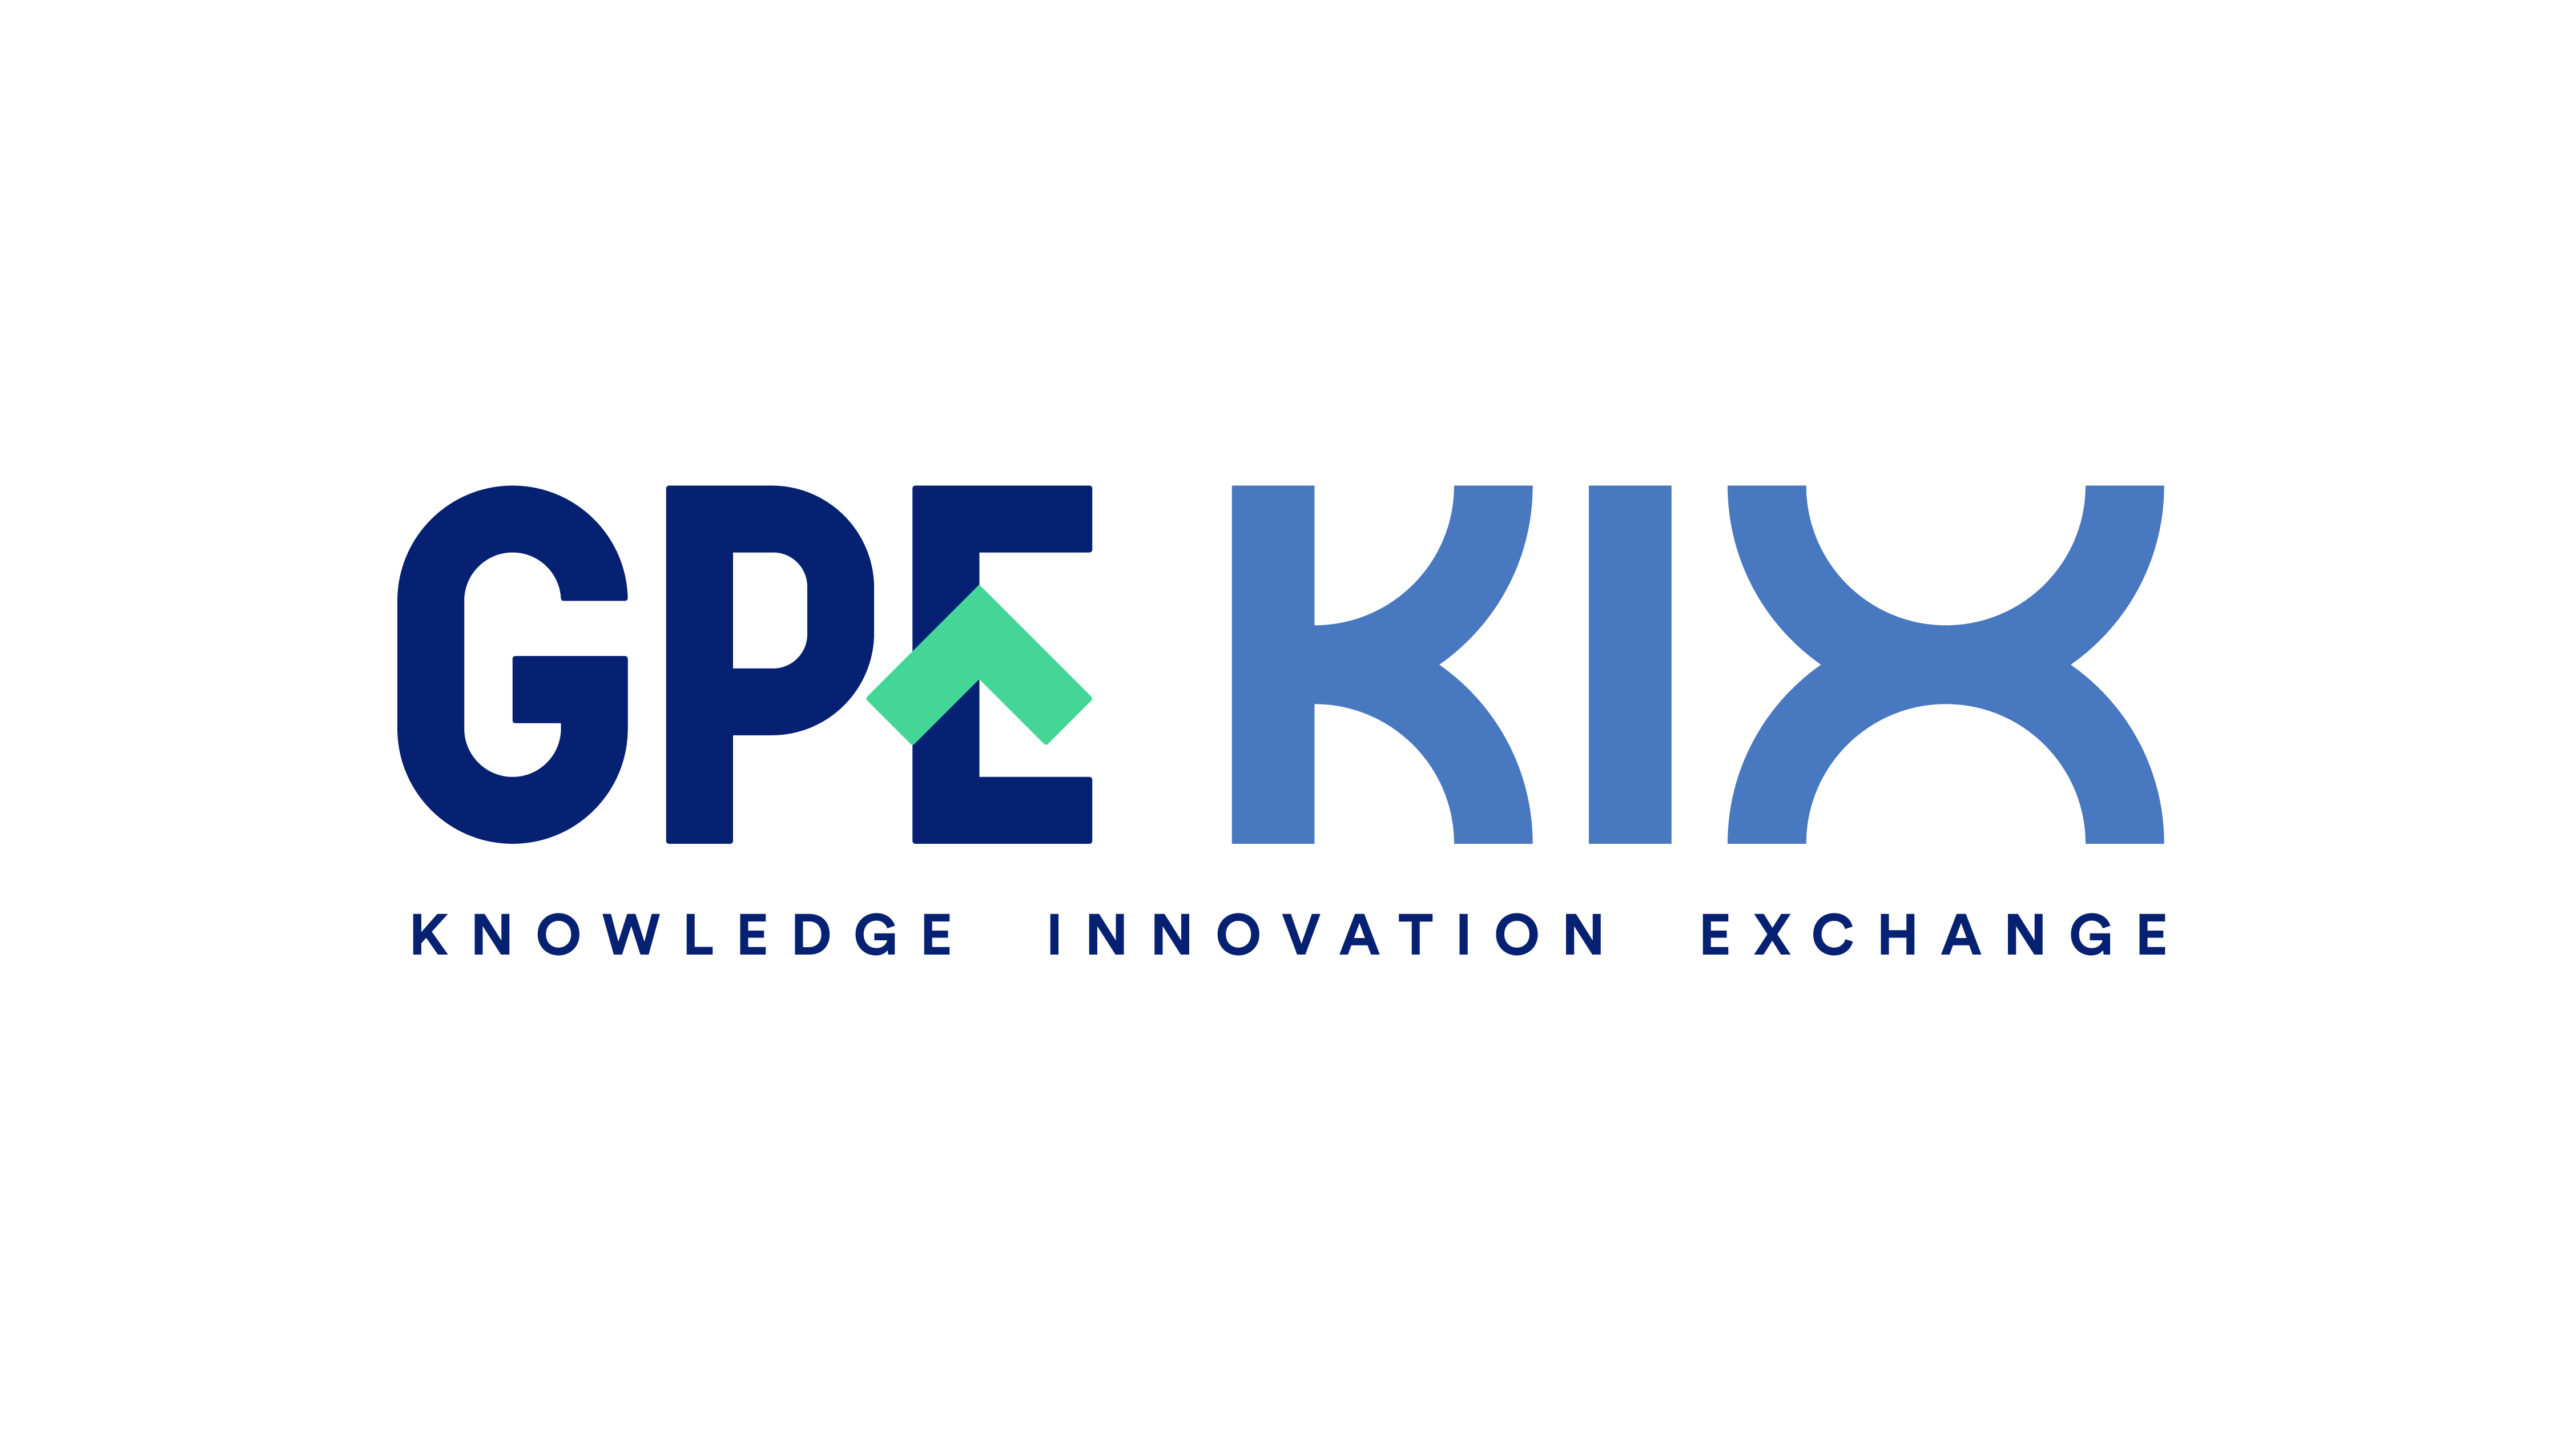 GPE KIX logo